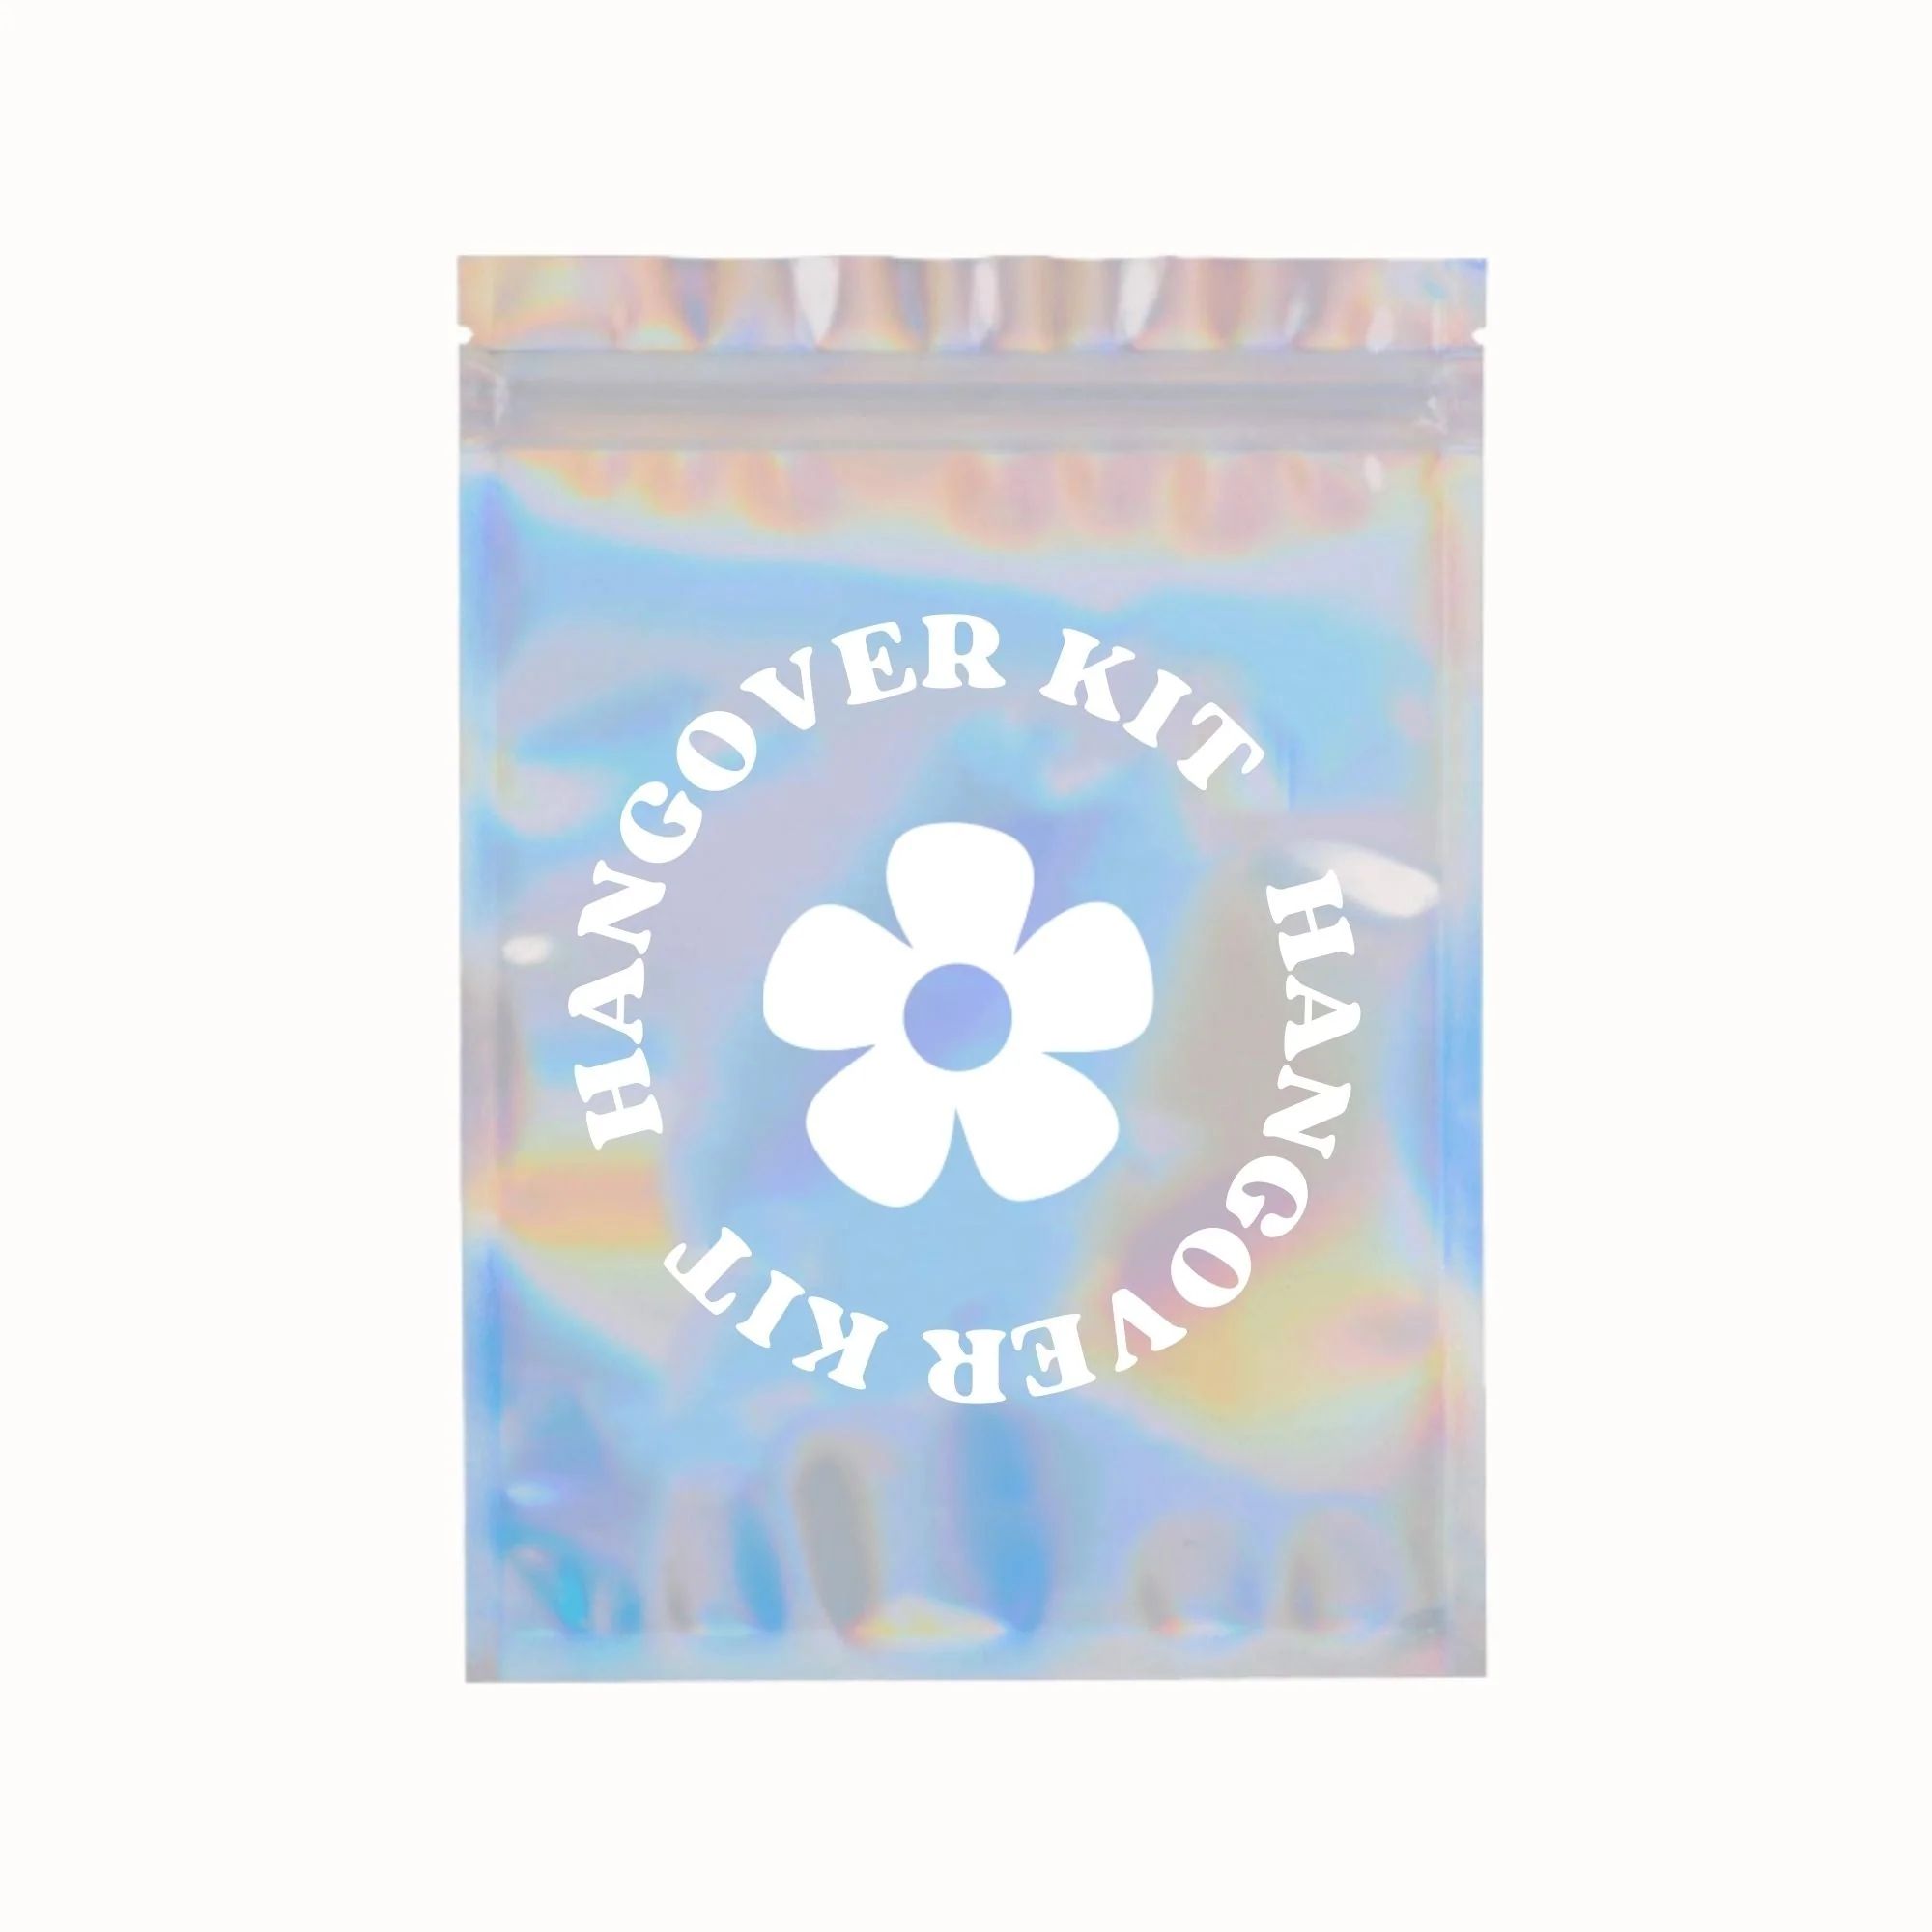 Dazed & Engaged Flower Hangover Kit | Sprinkled With Pink